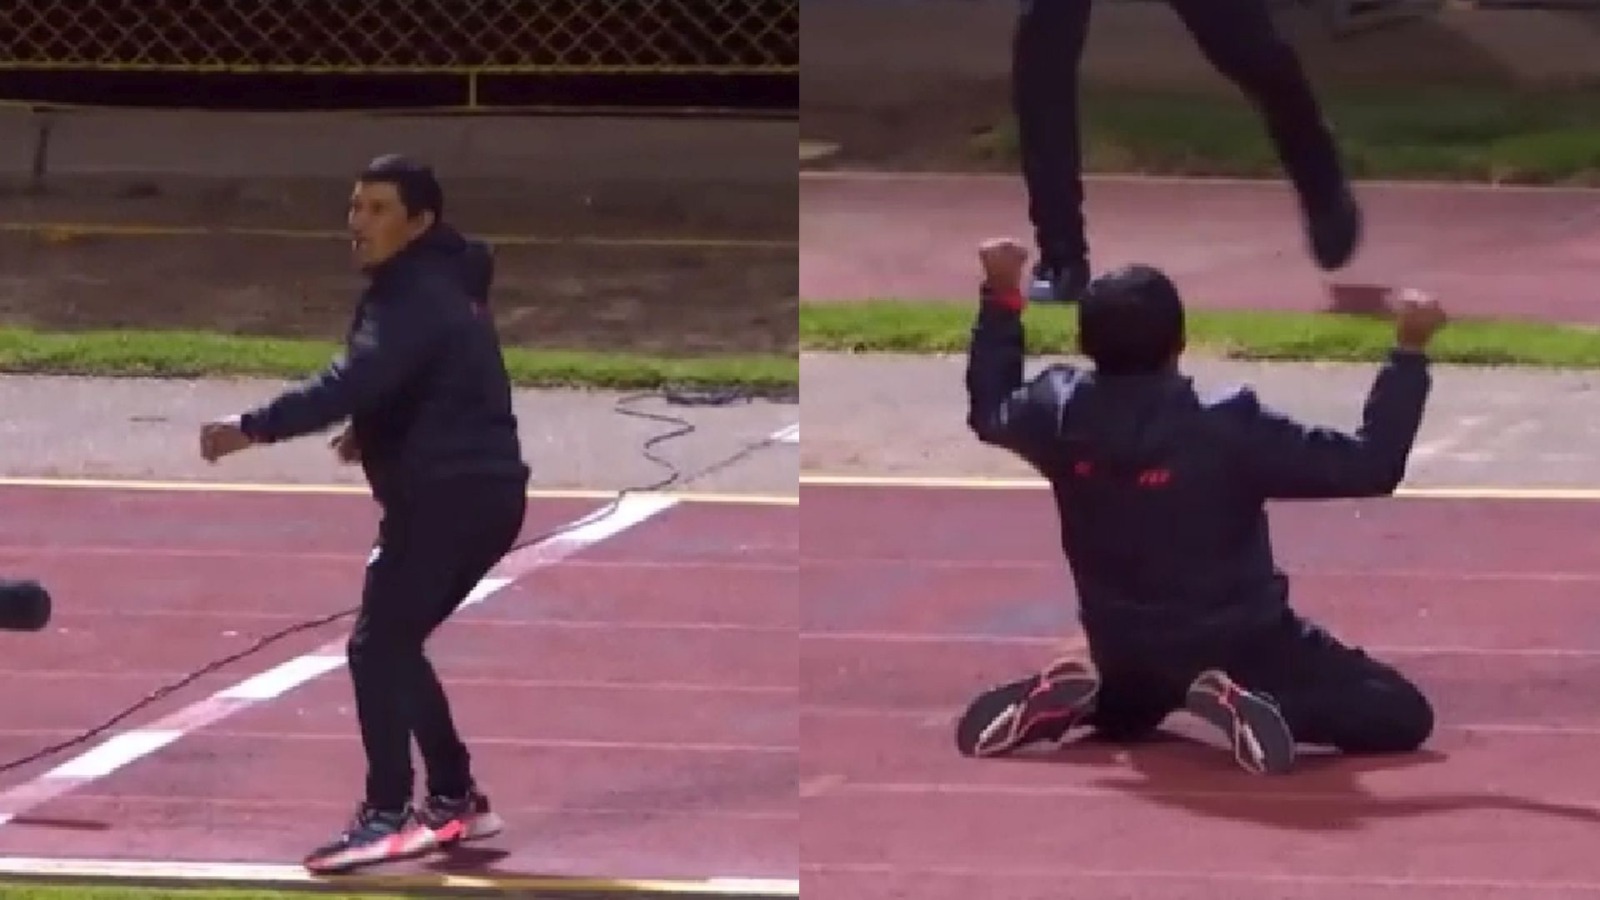 Mifflin Bermúdez, Sport Huancayo coach, celebrated Carlos Escobar's goal.